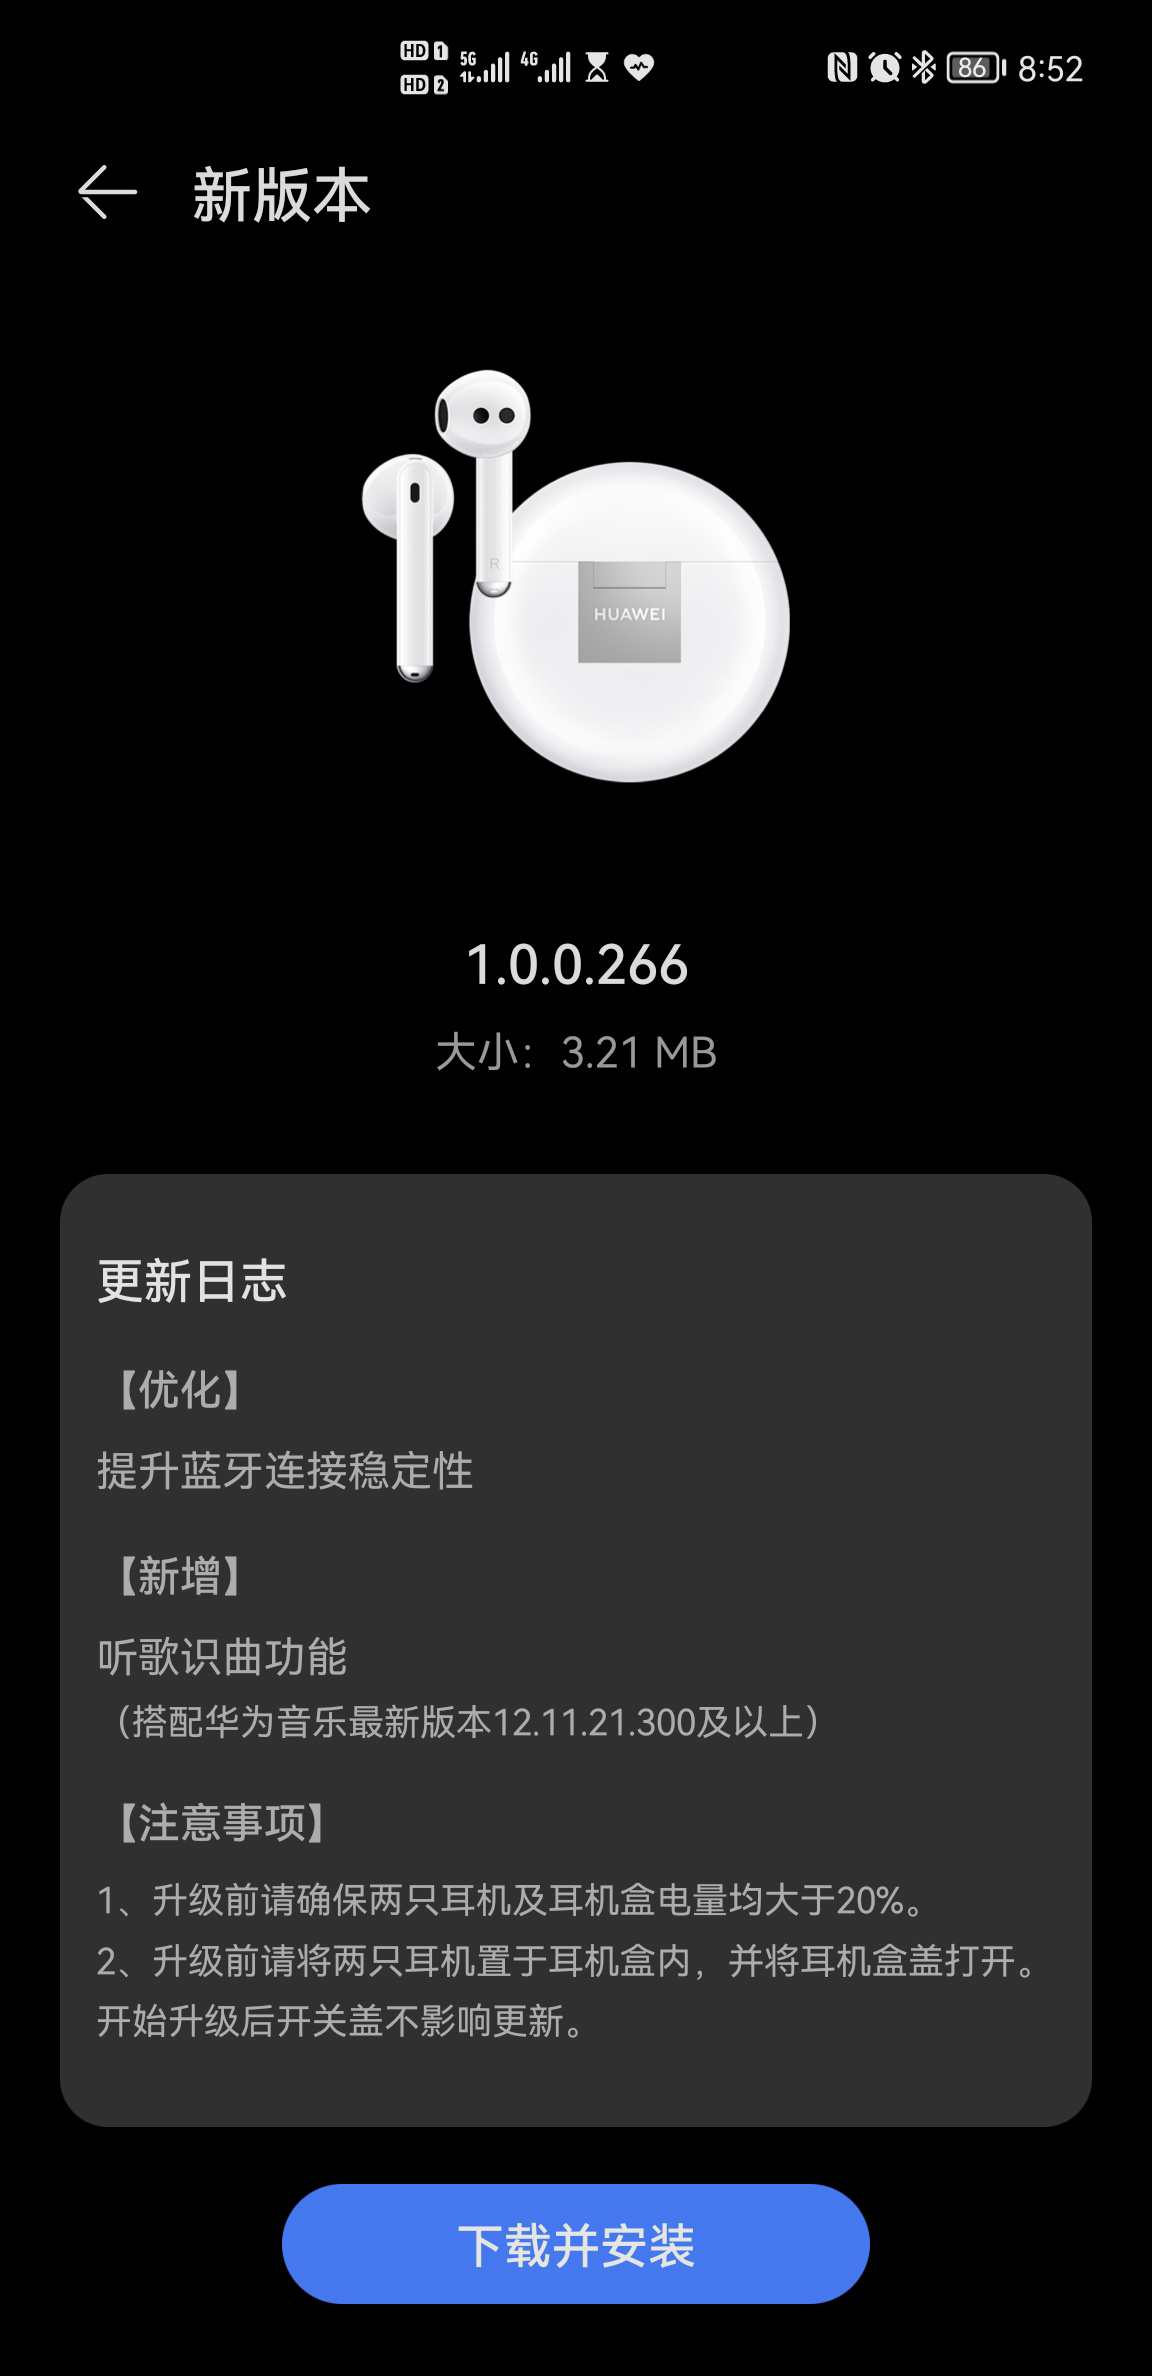 Huawei FreeBuds 4 gets 1.0.0.266 firmware update